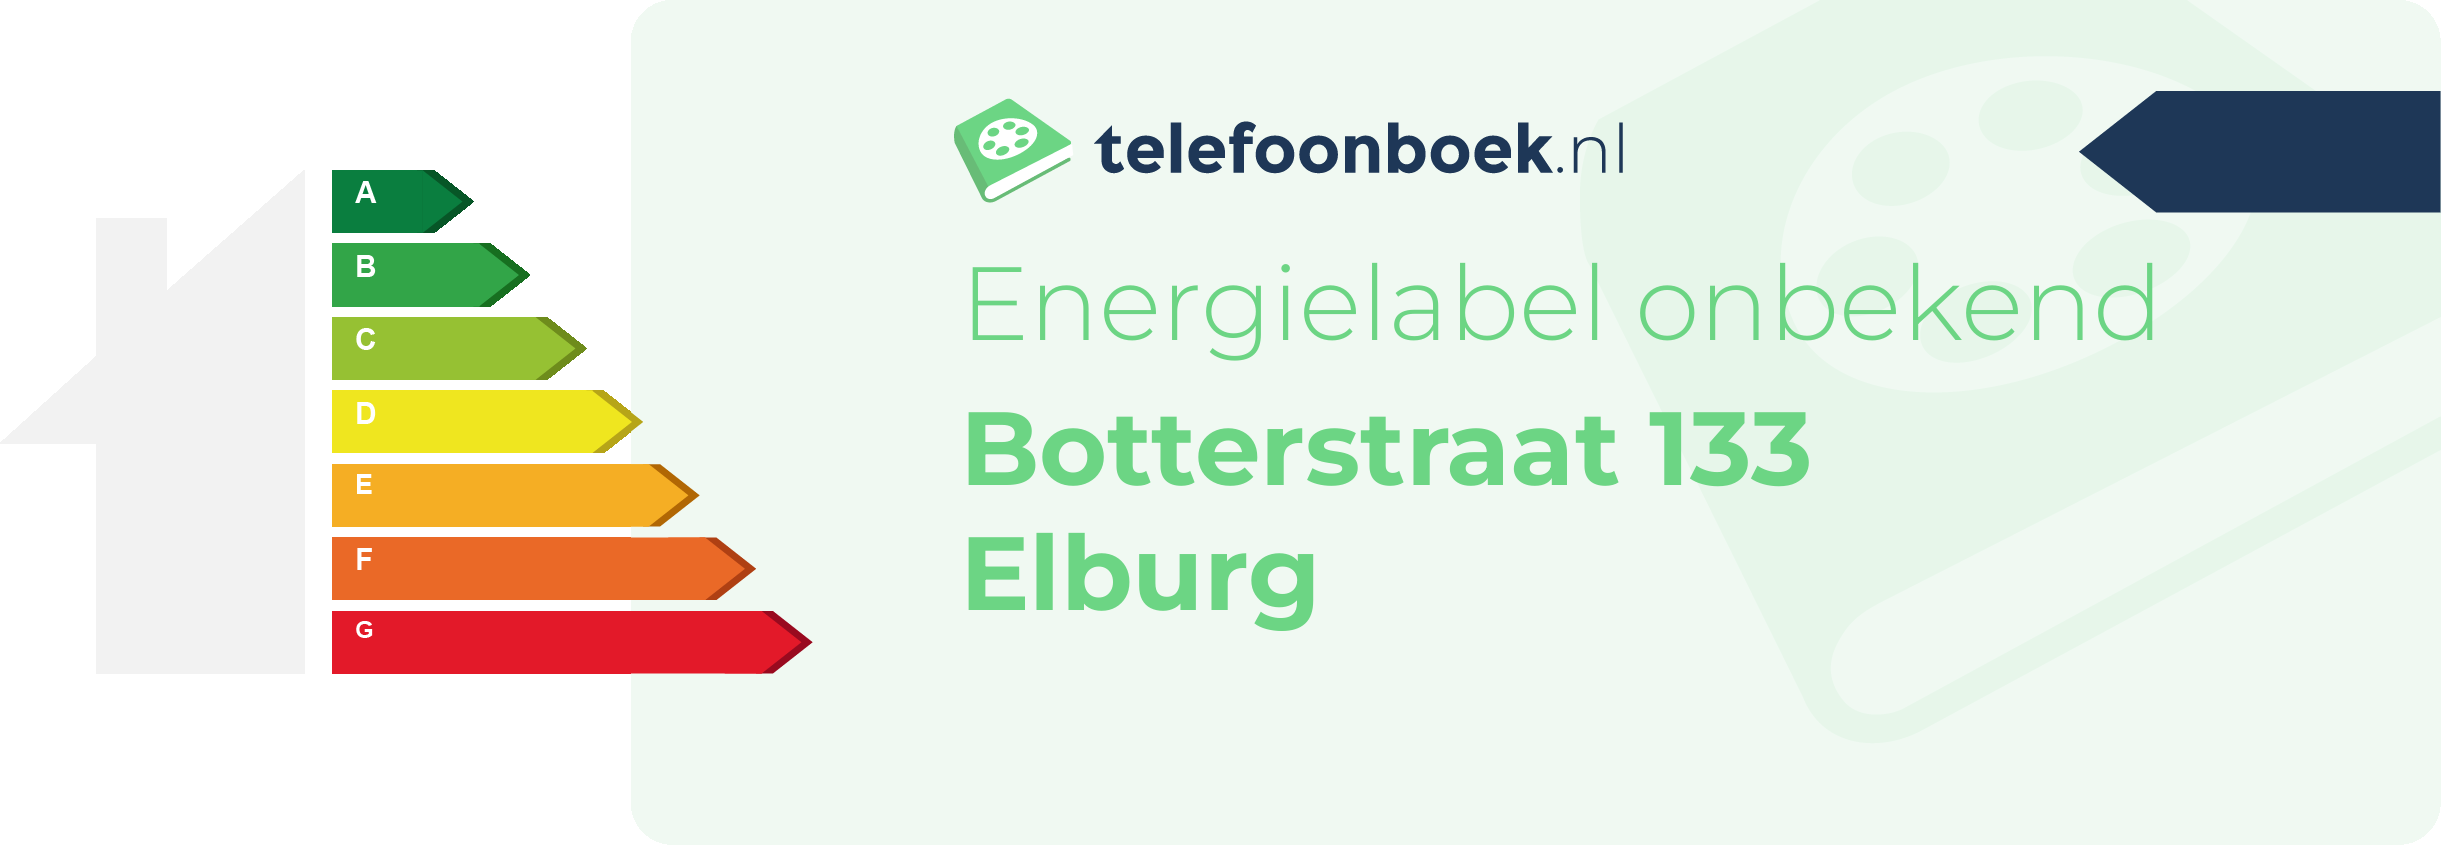 Energielabel Botterstraat 133 Elburg